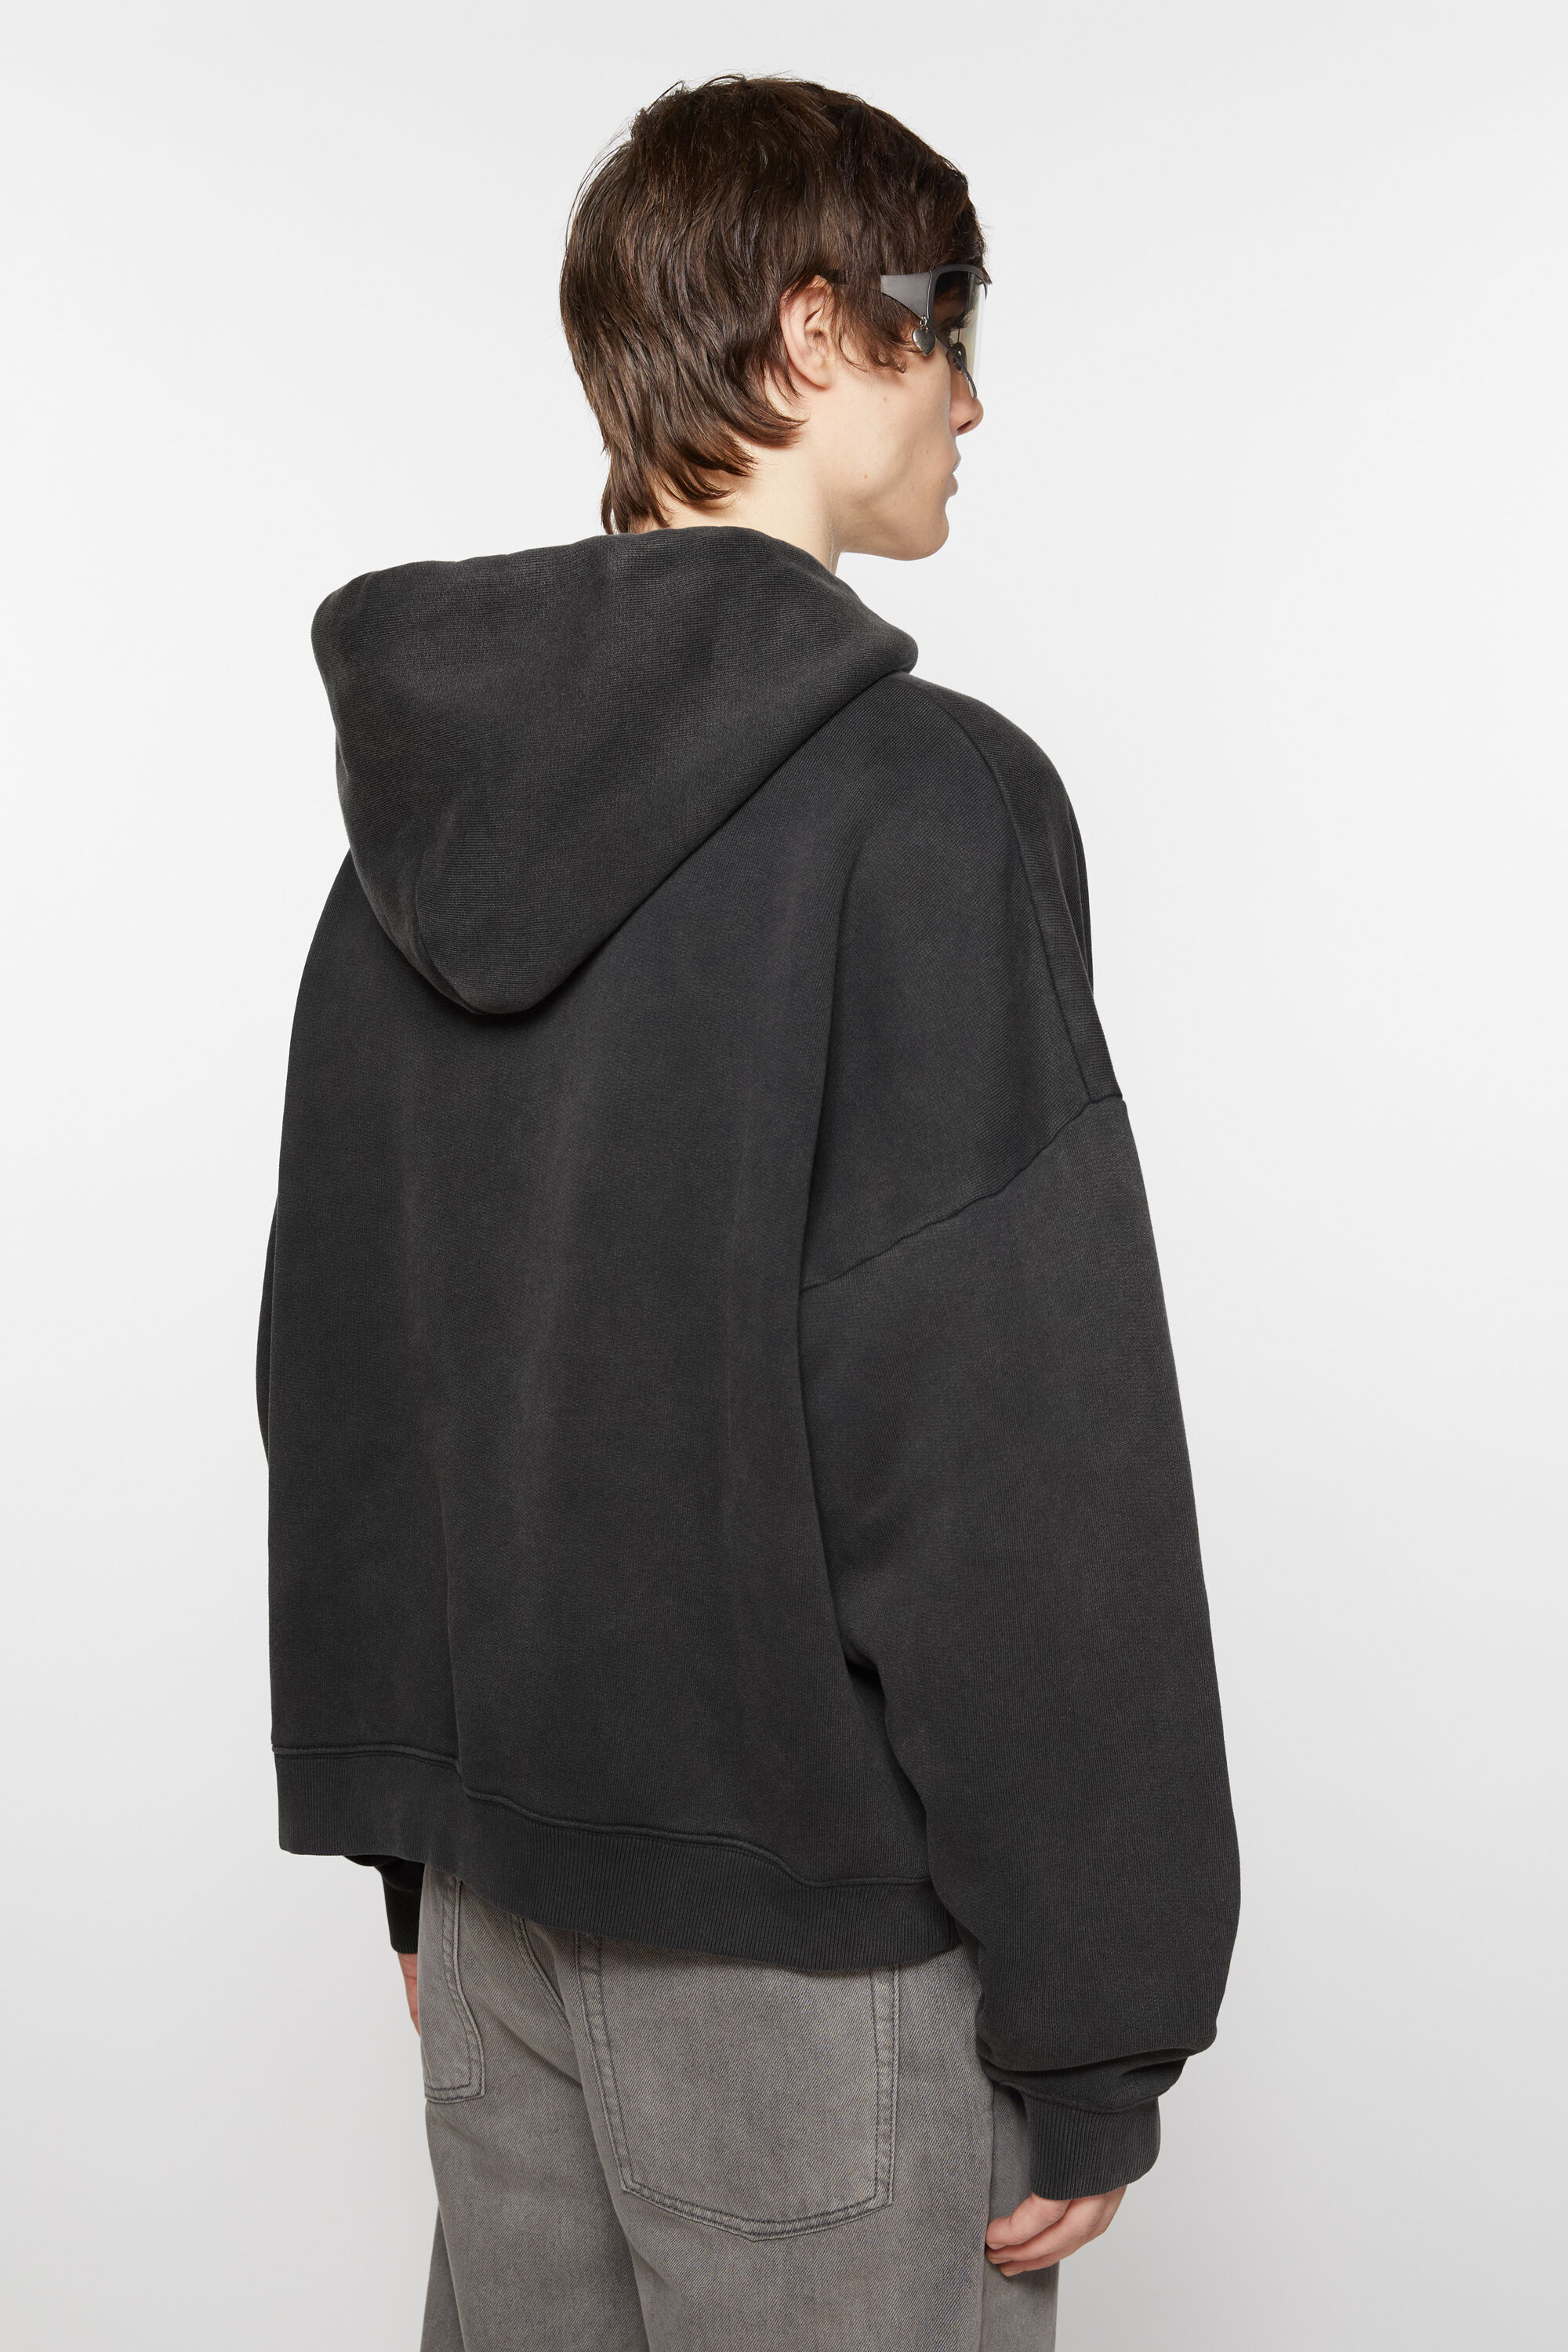 Acne Studios - Print hooded sweater - Faded black